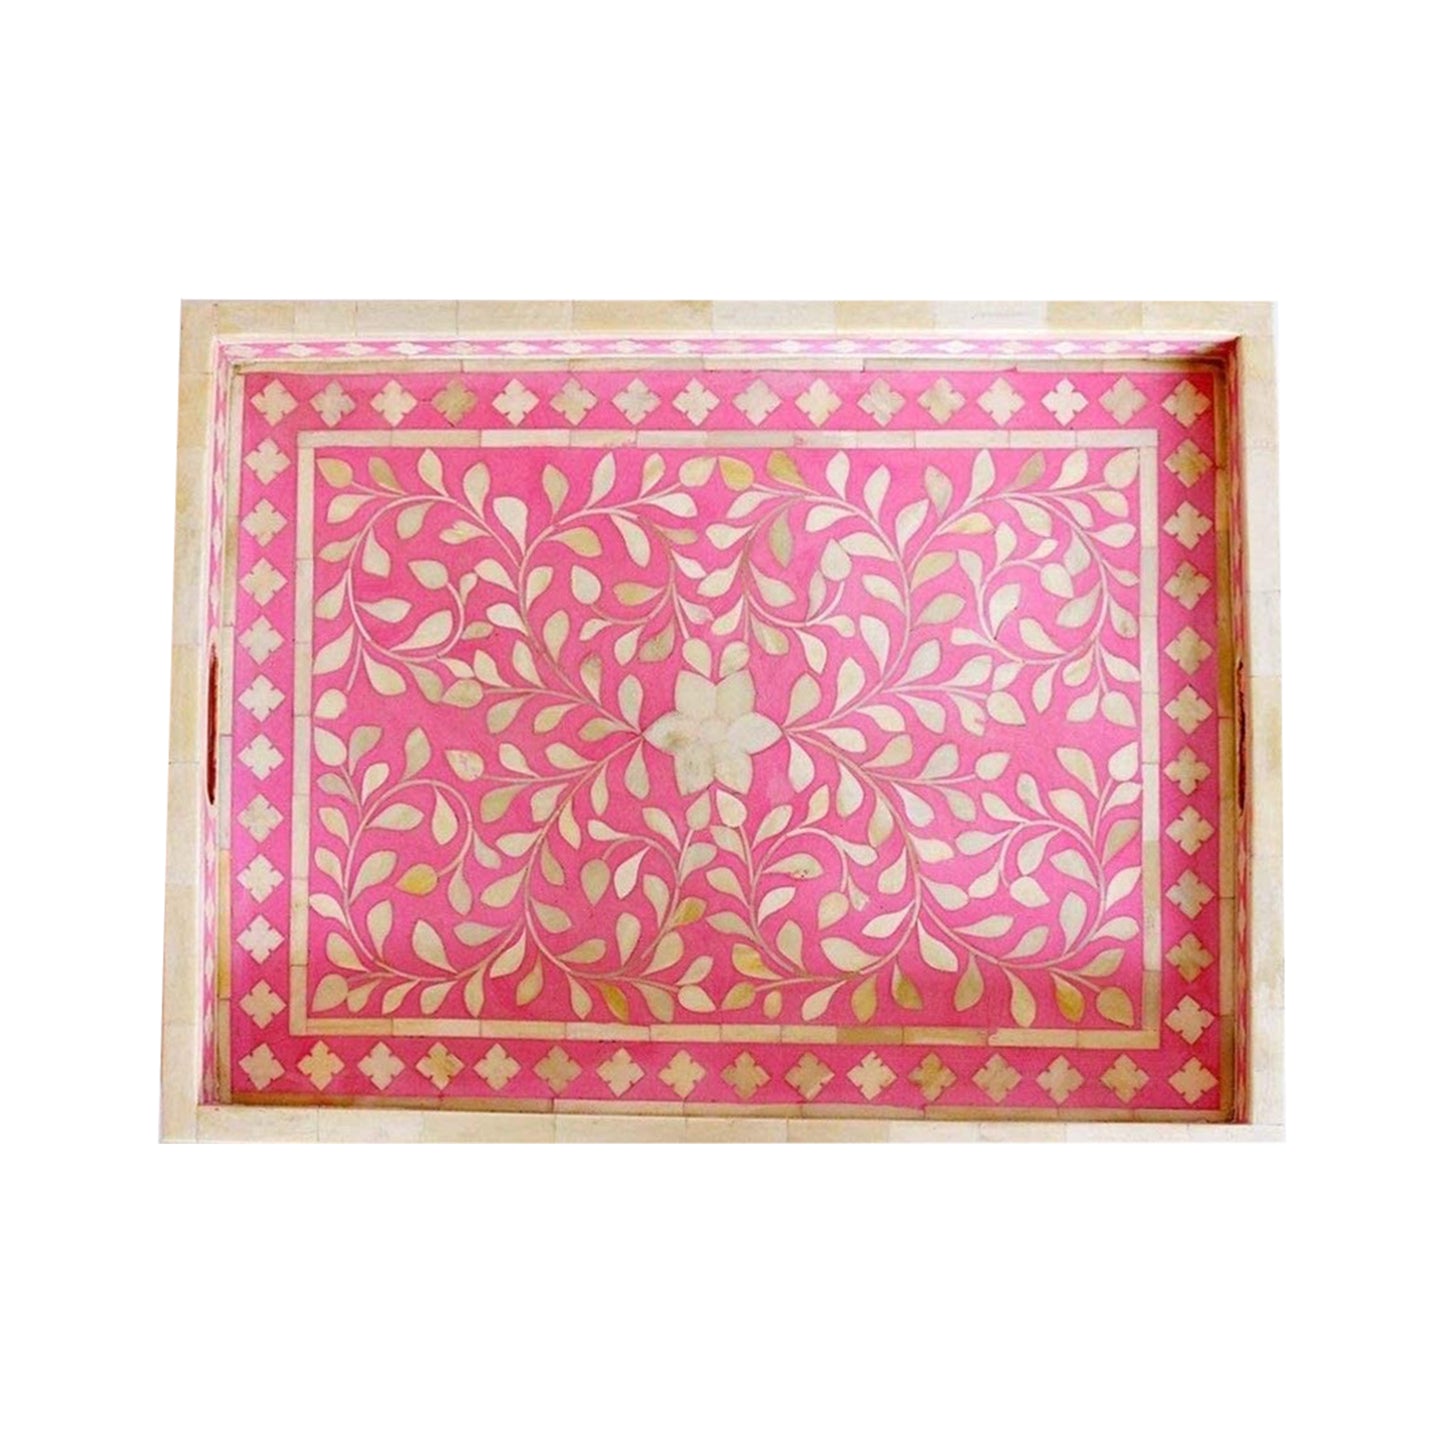 Handmade Pink Floral Wooden Art Bone Inlay Decorative Serving Tray